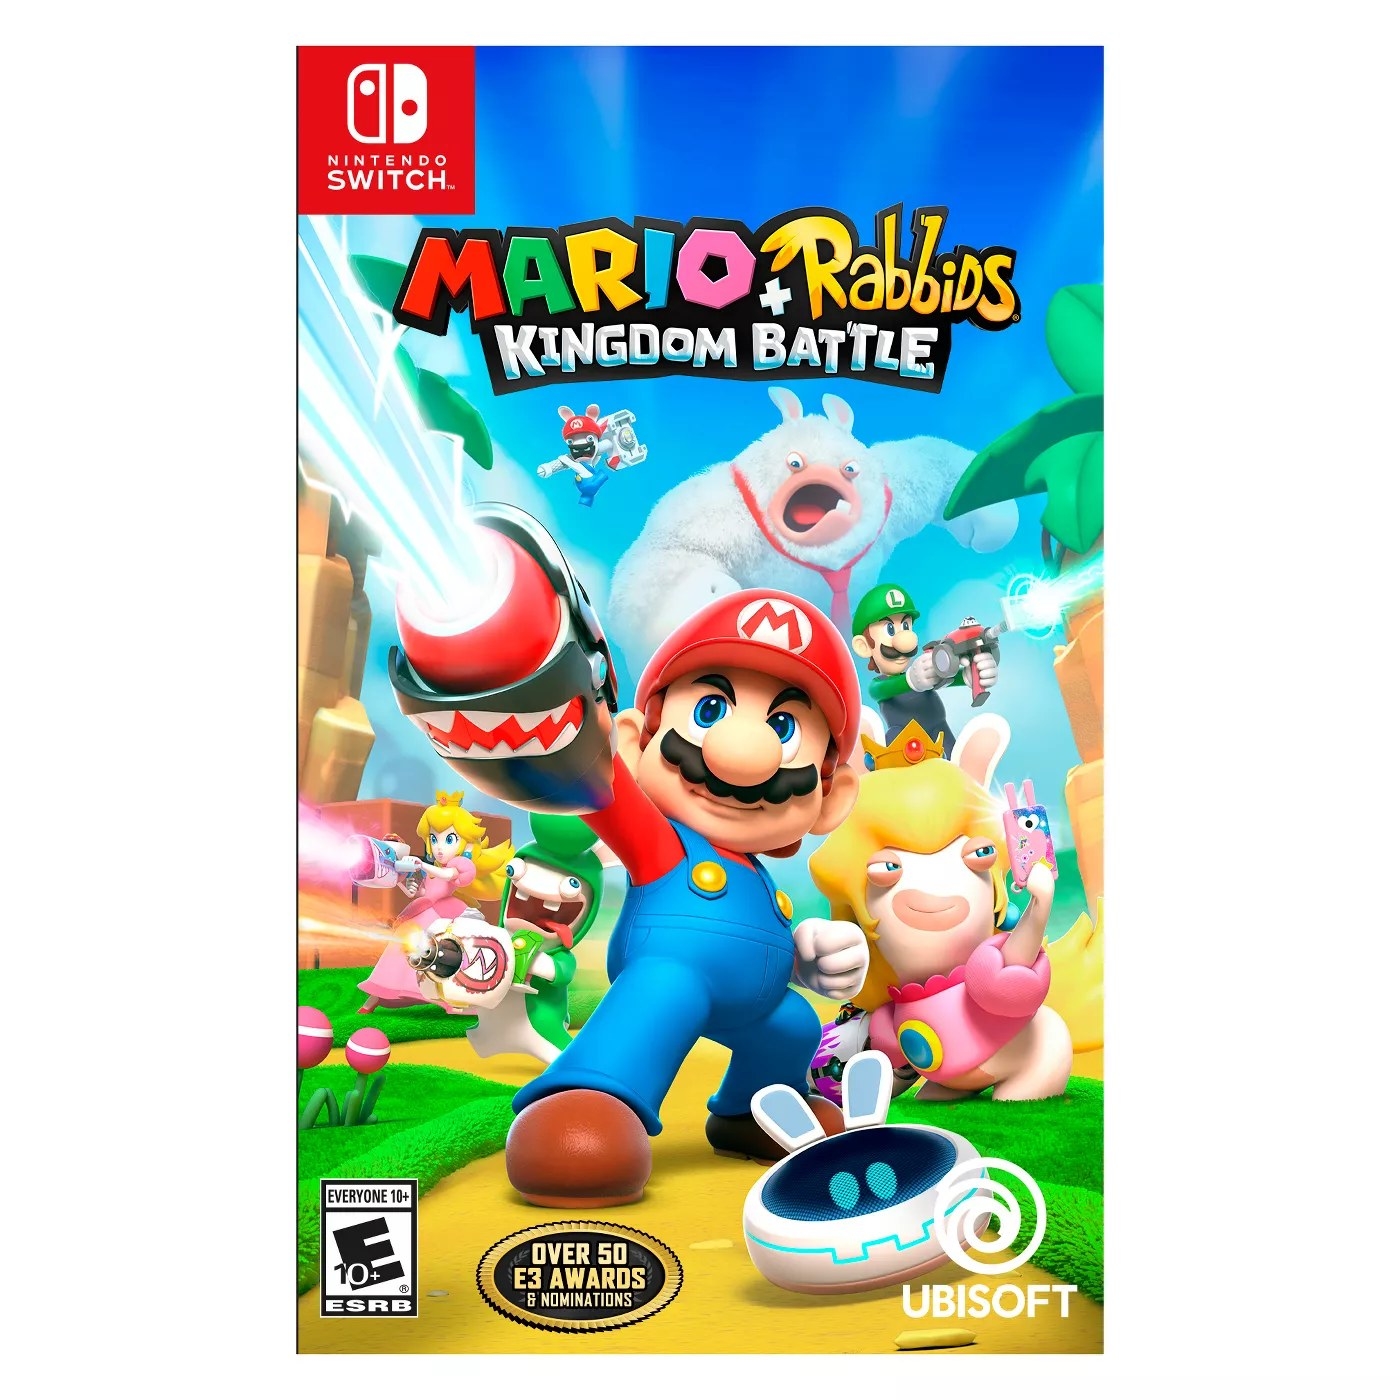 Mario+Rabbids Kingdom Battle game